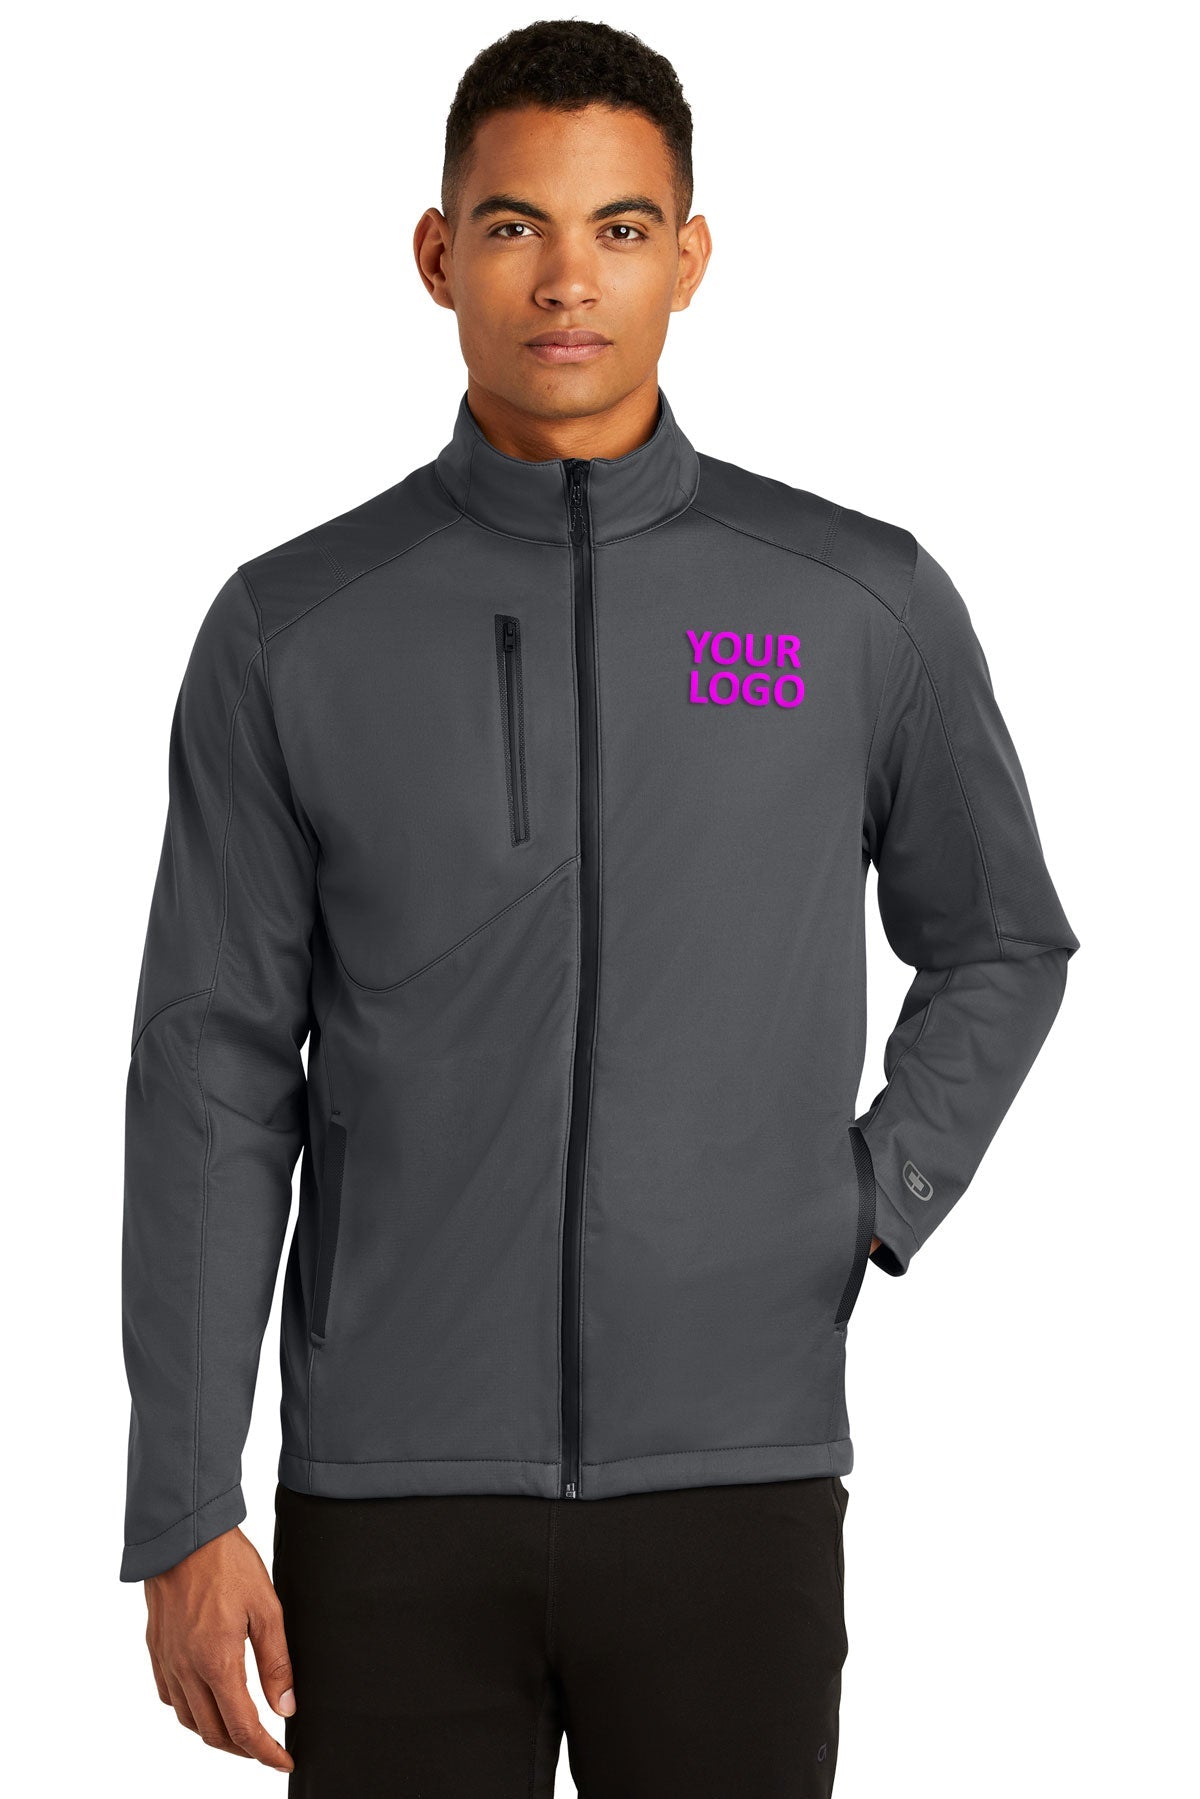 OGIO Endurance Gear Grey OE720 company logo jackets